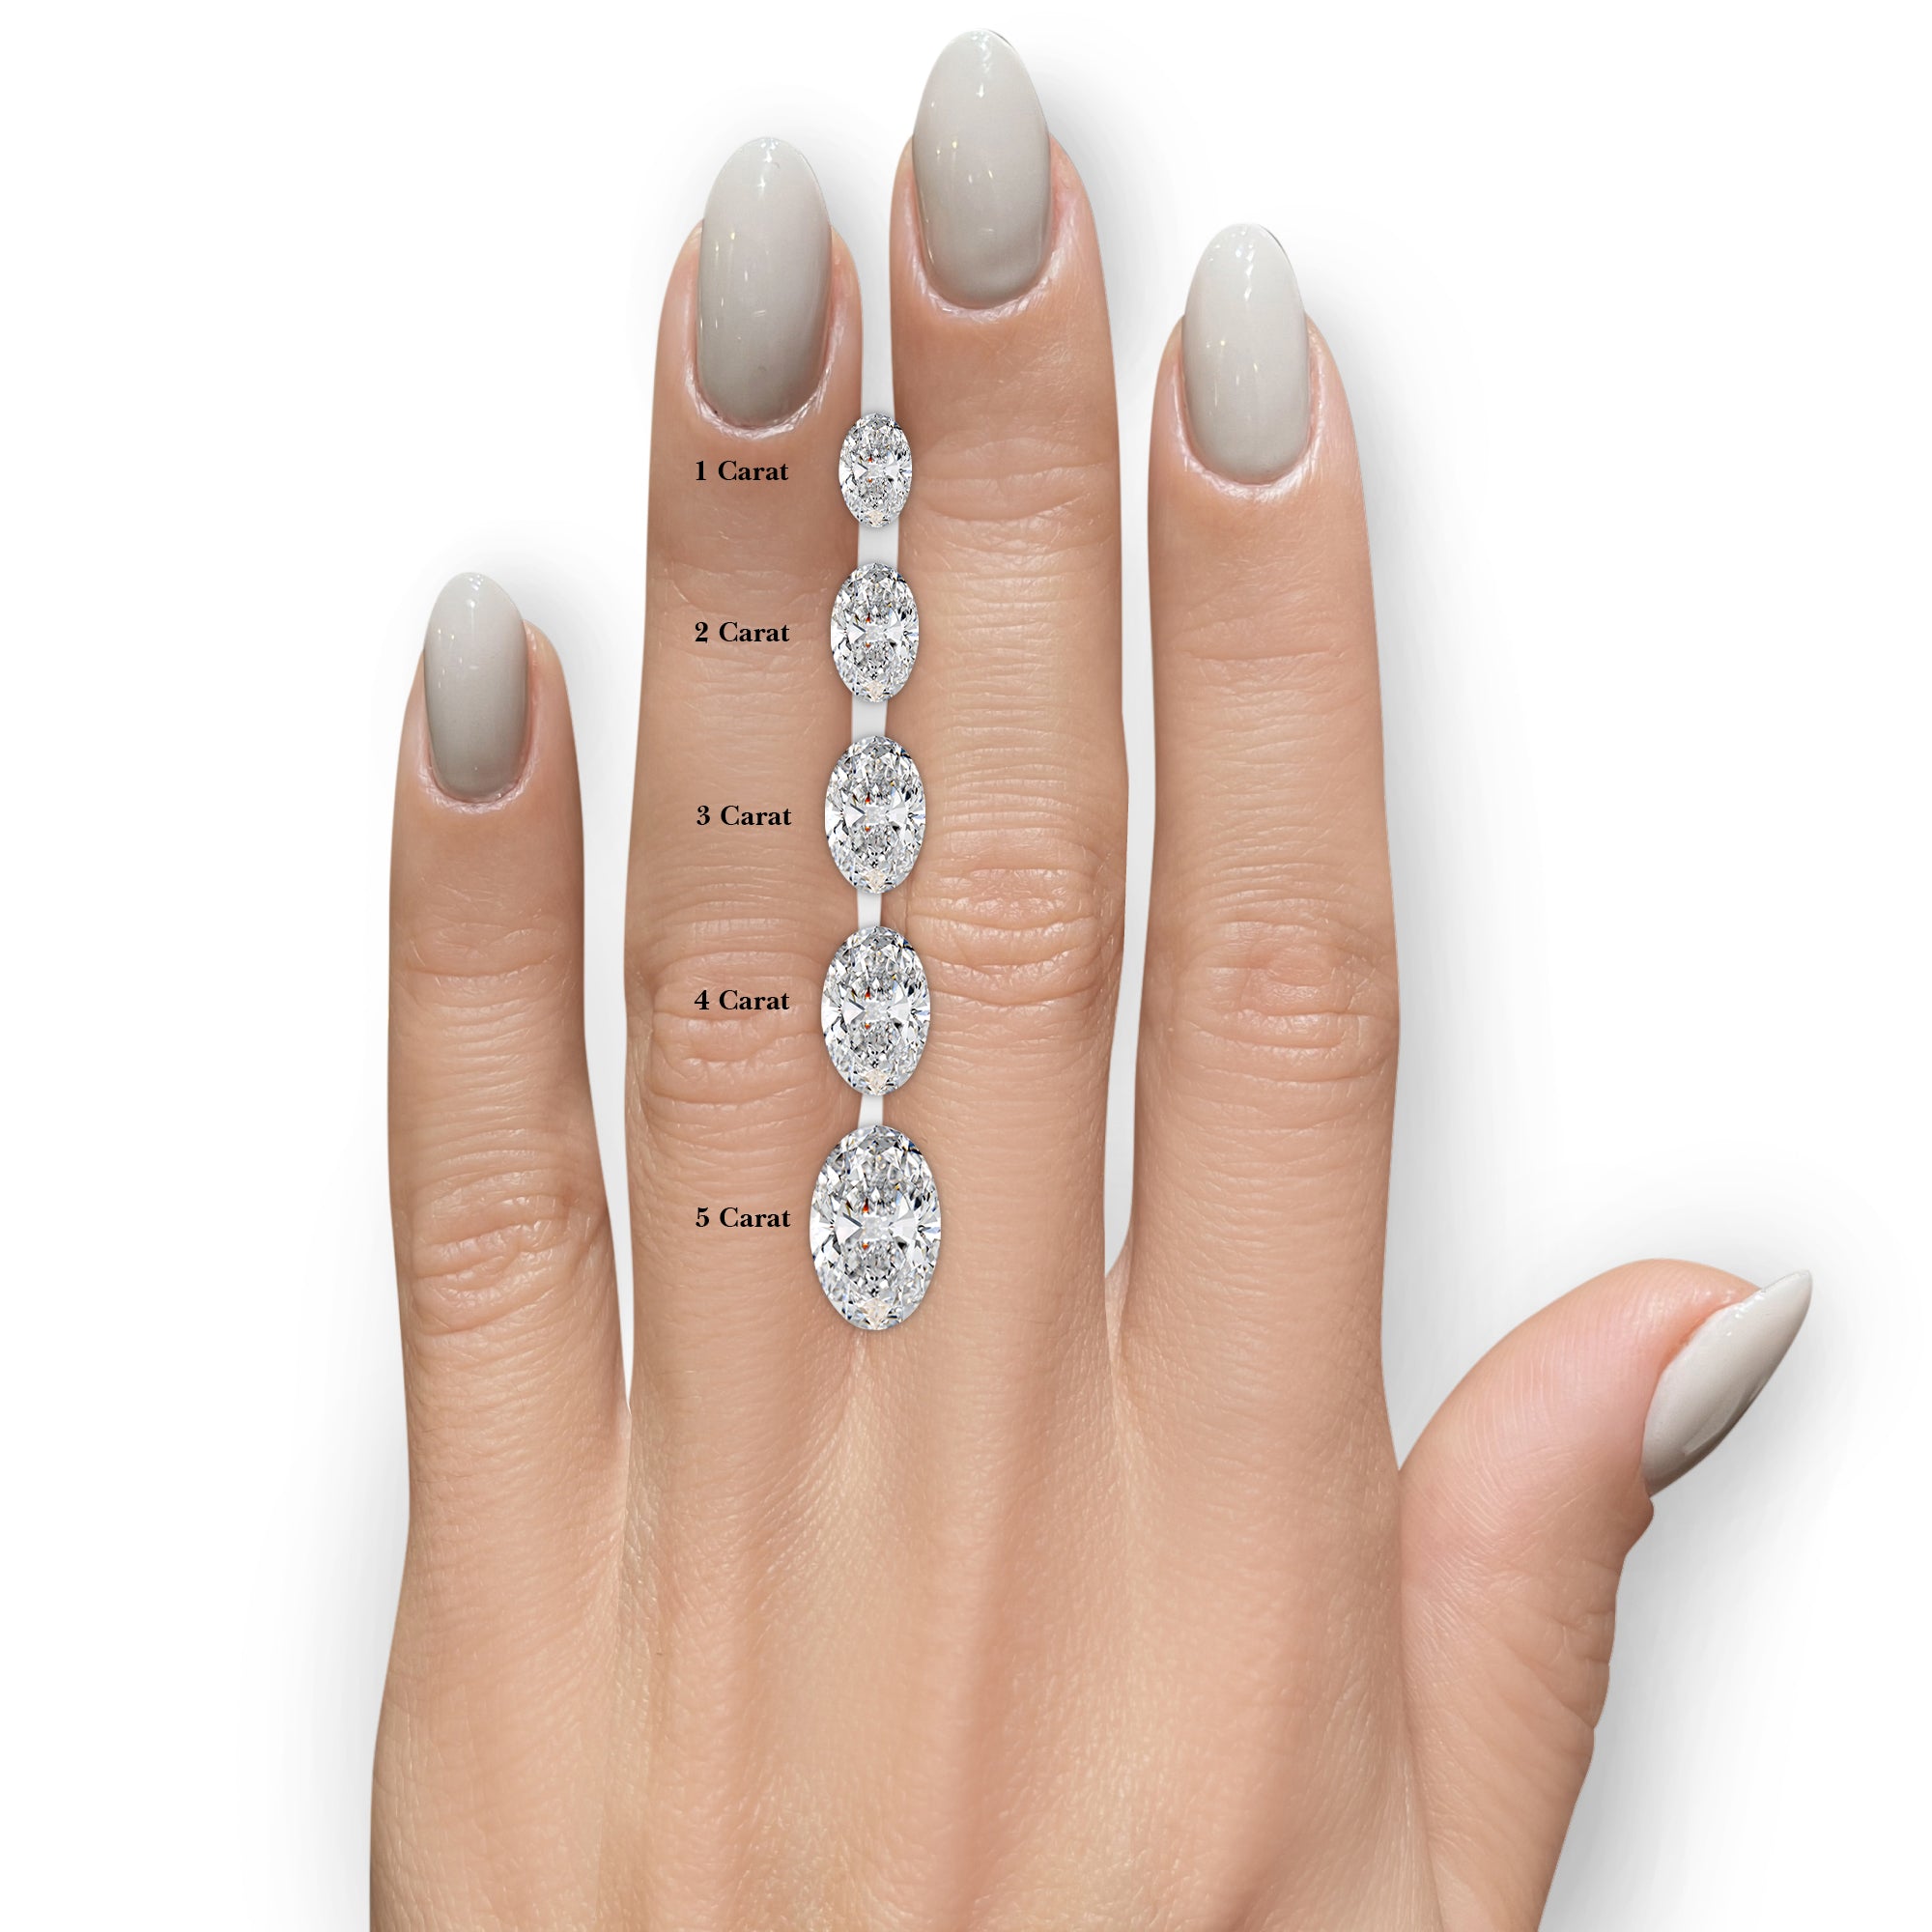 Willa Diamond Engagement Ring -14K White Gold